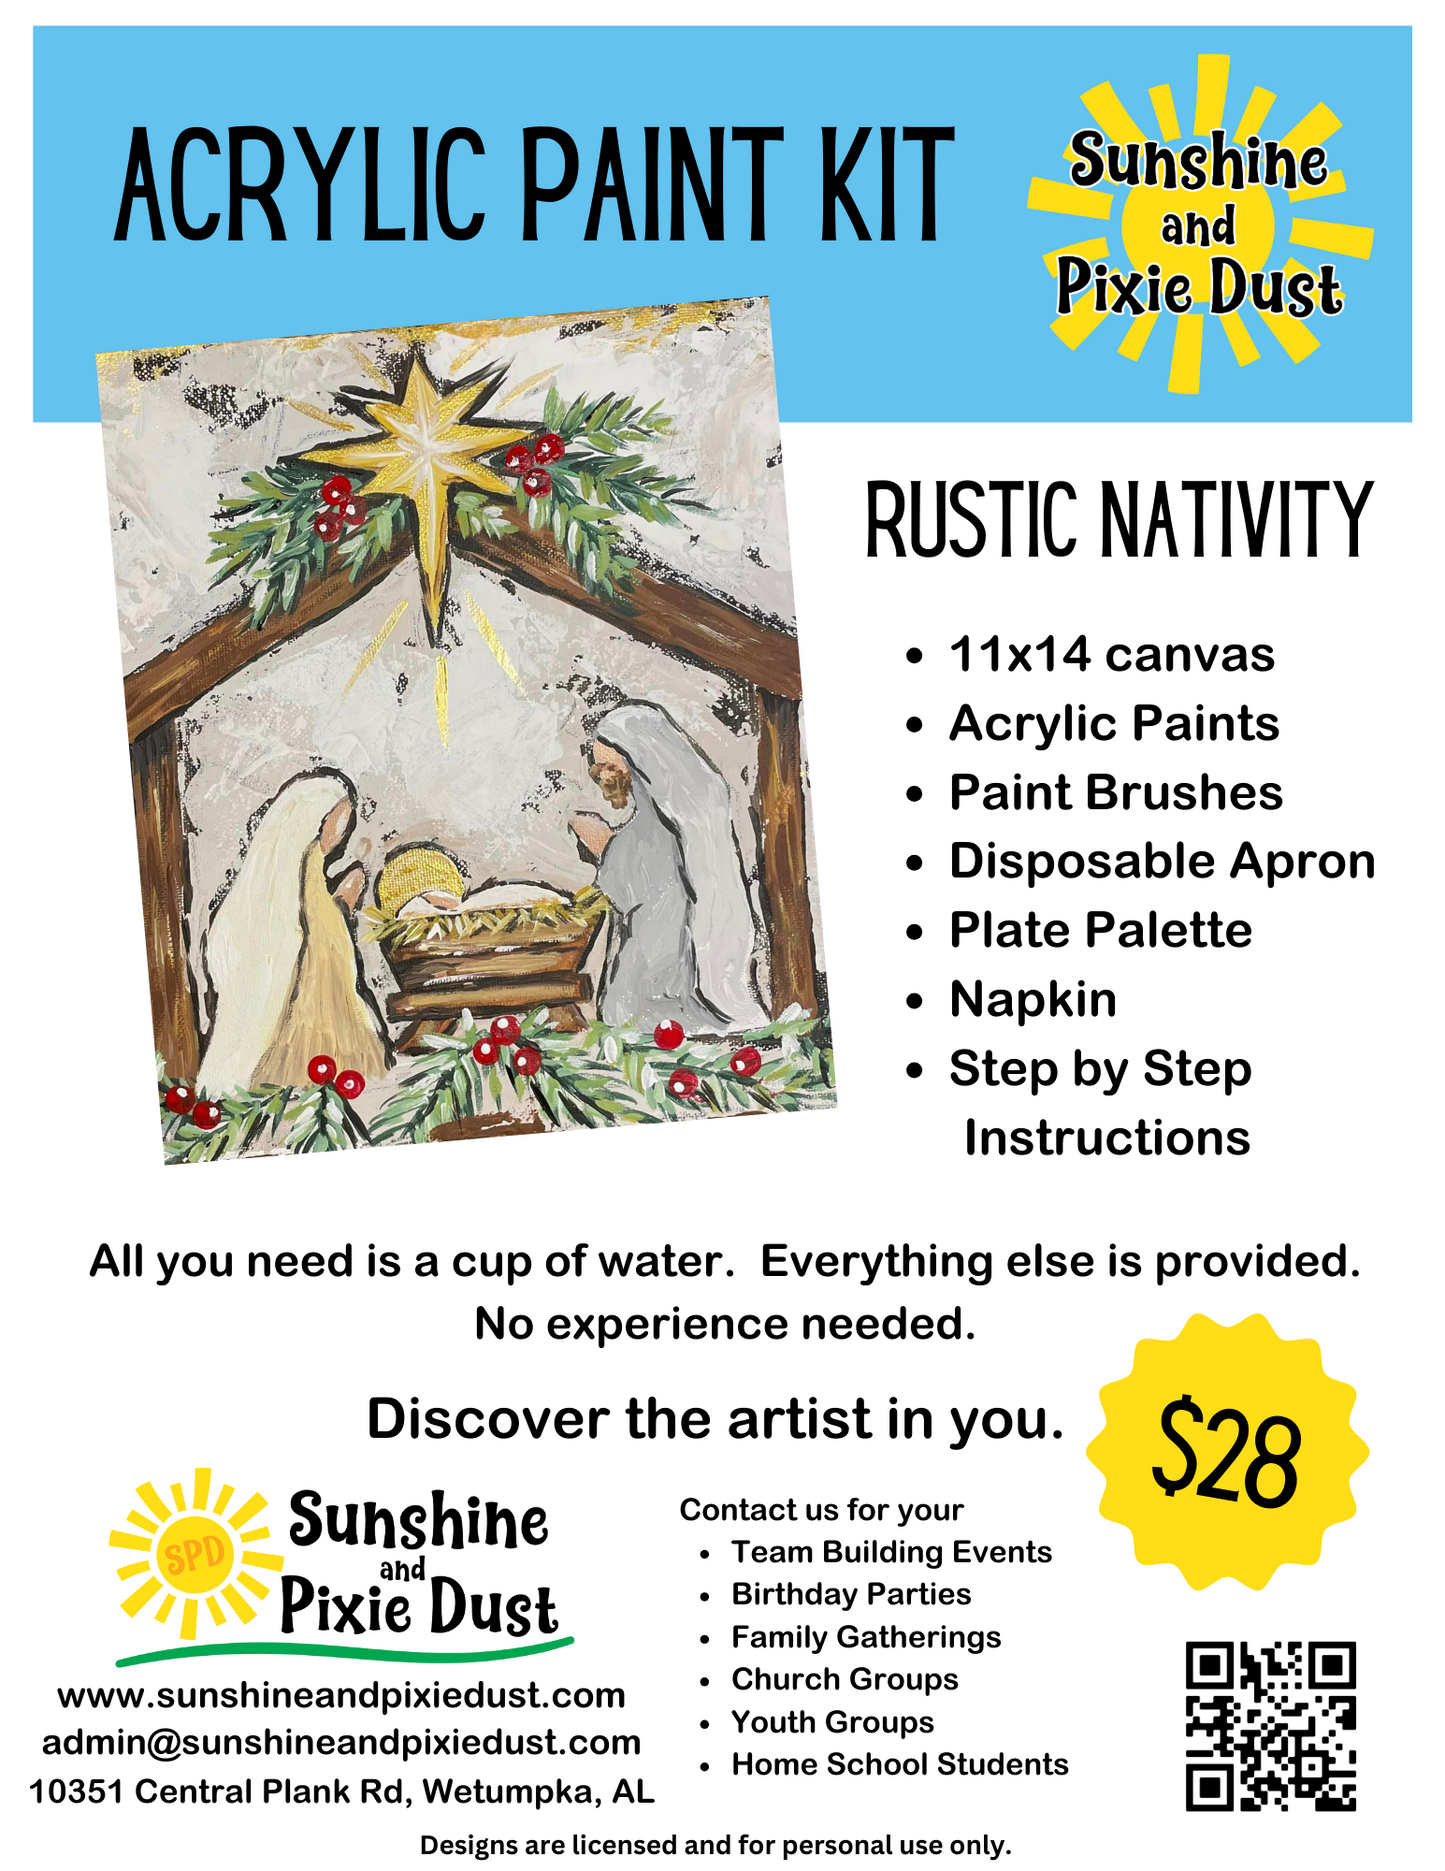 Rustic Nativity Acrylic Paint Kit